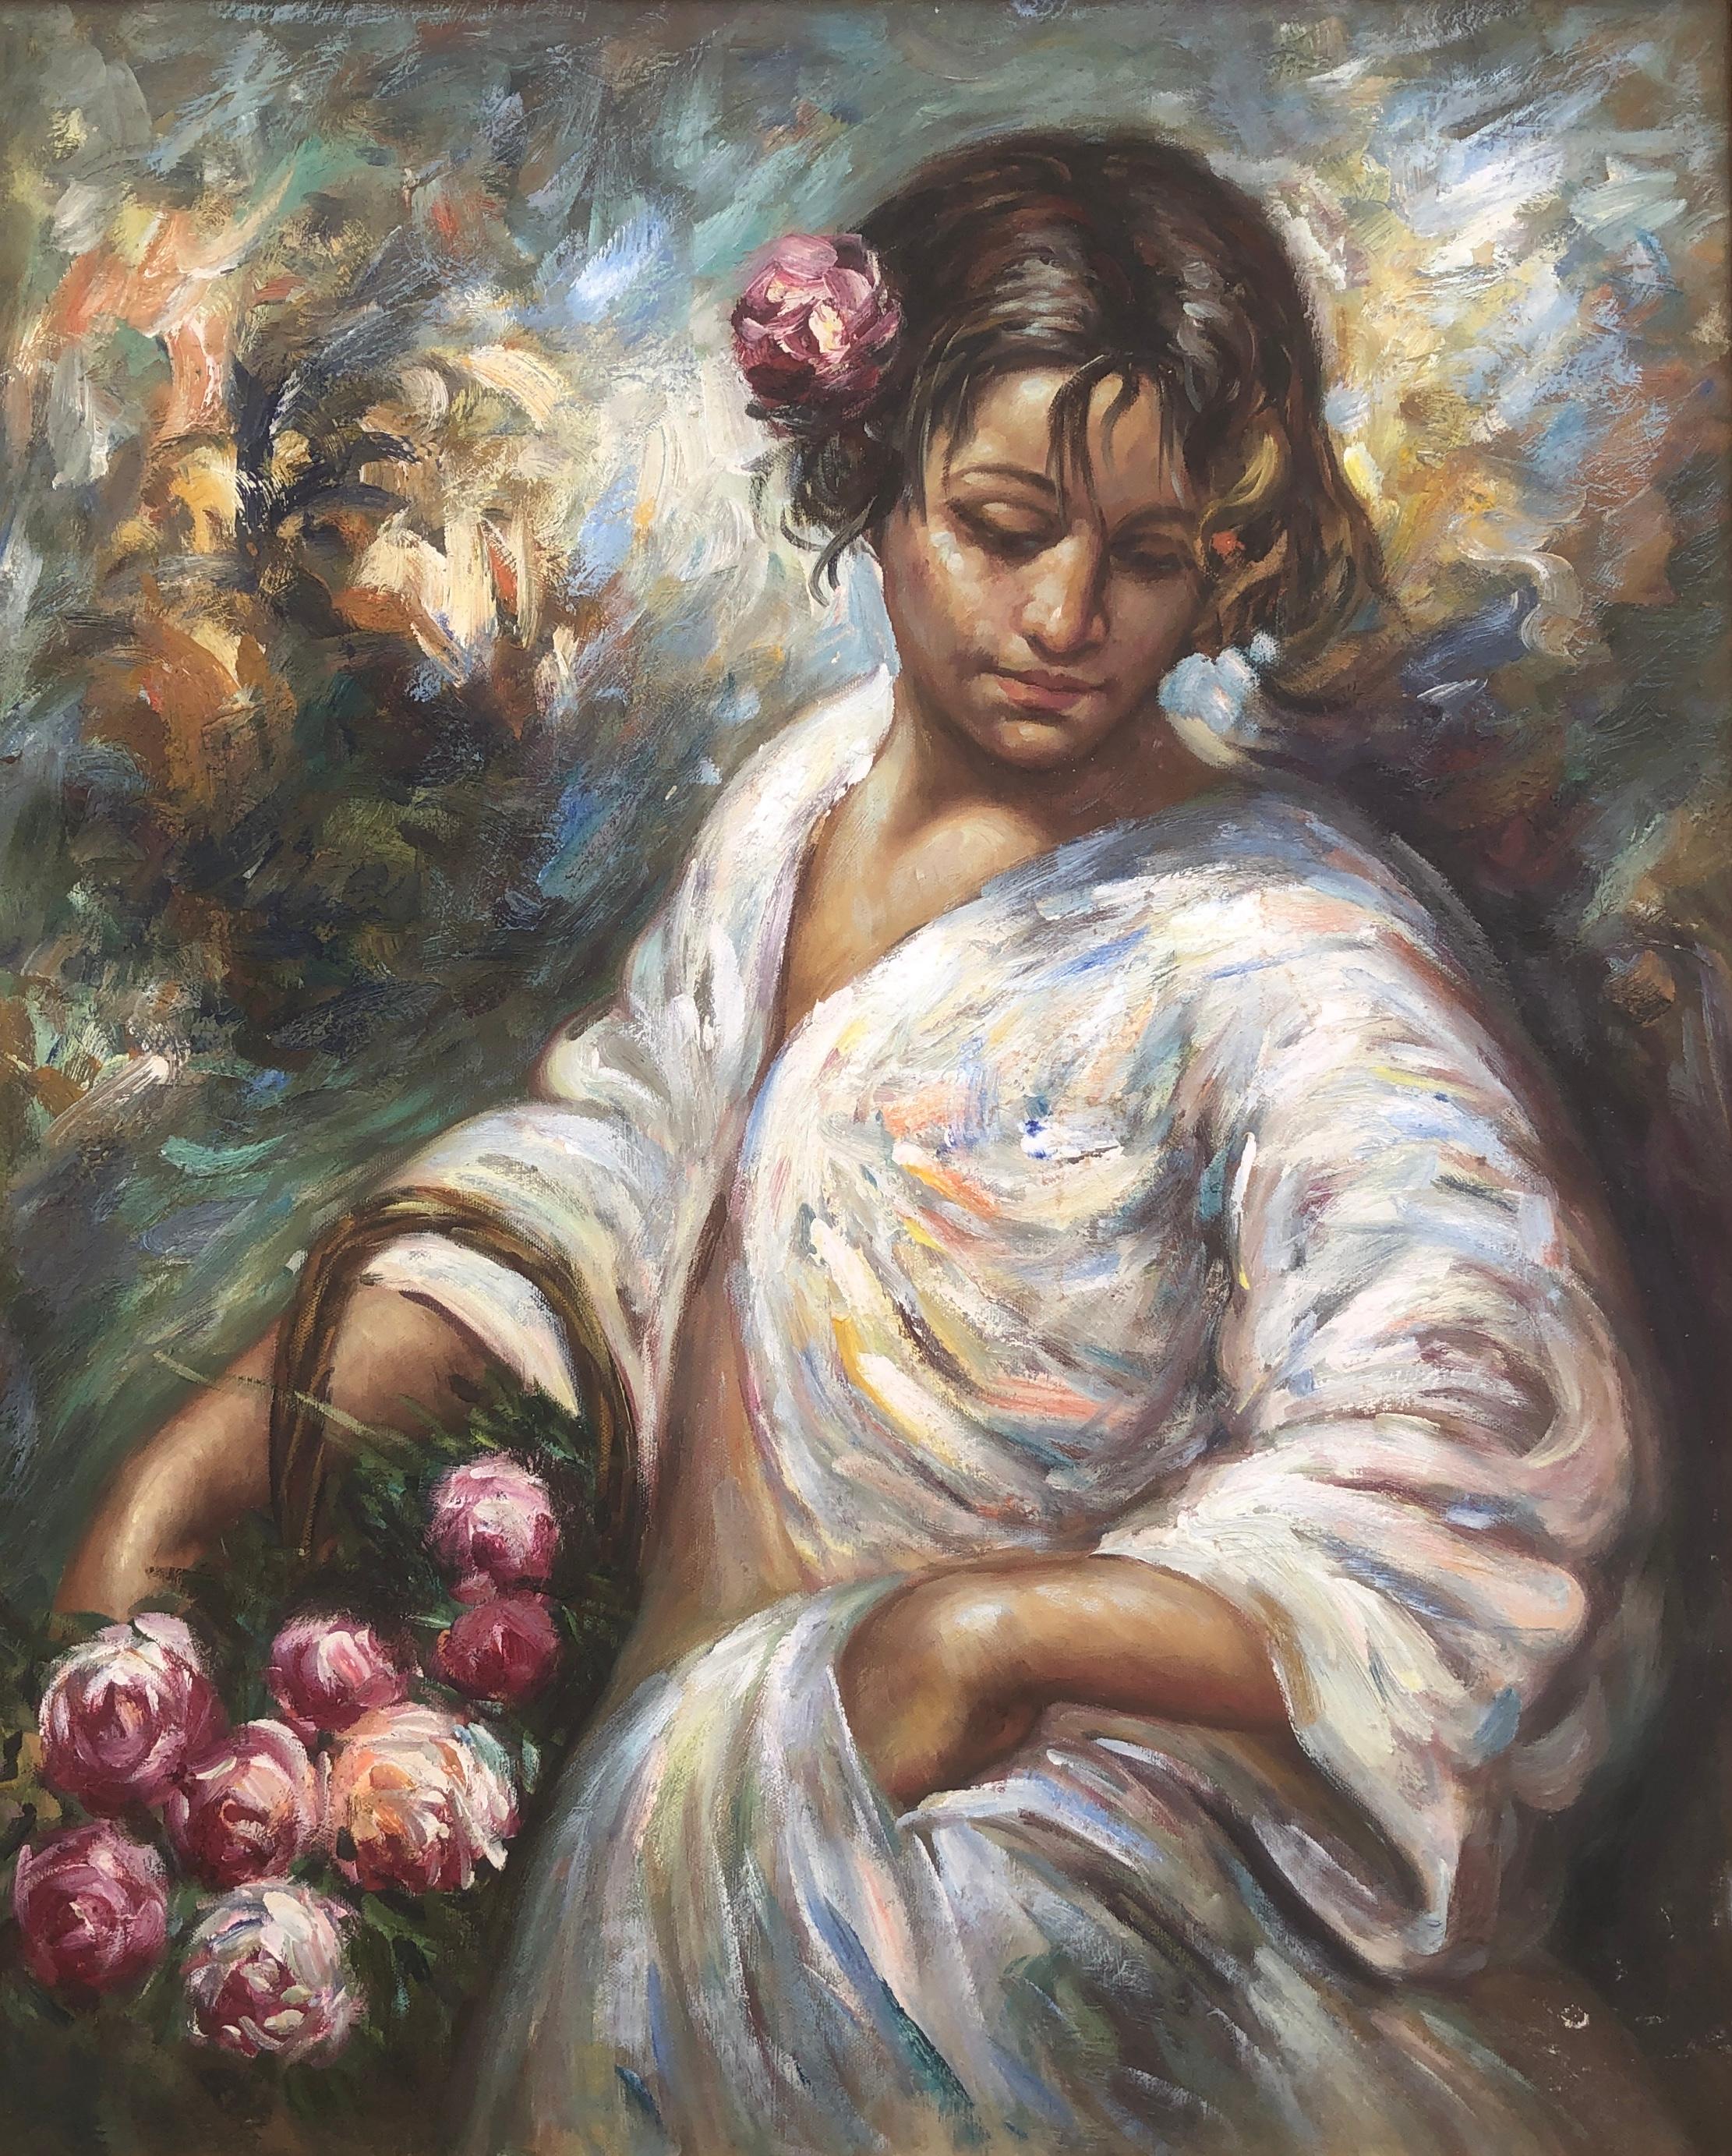 José Royo Portrait Painting – junge Frau mit Blumenkorb Öl auf Leinwand Gemälde